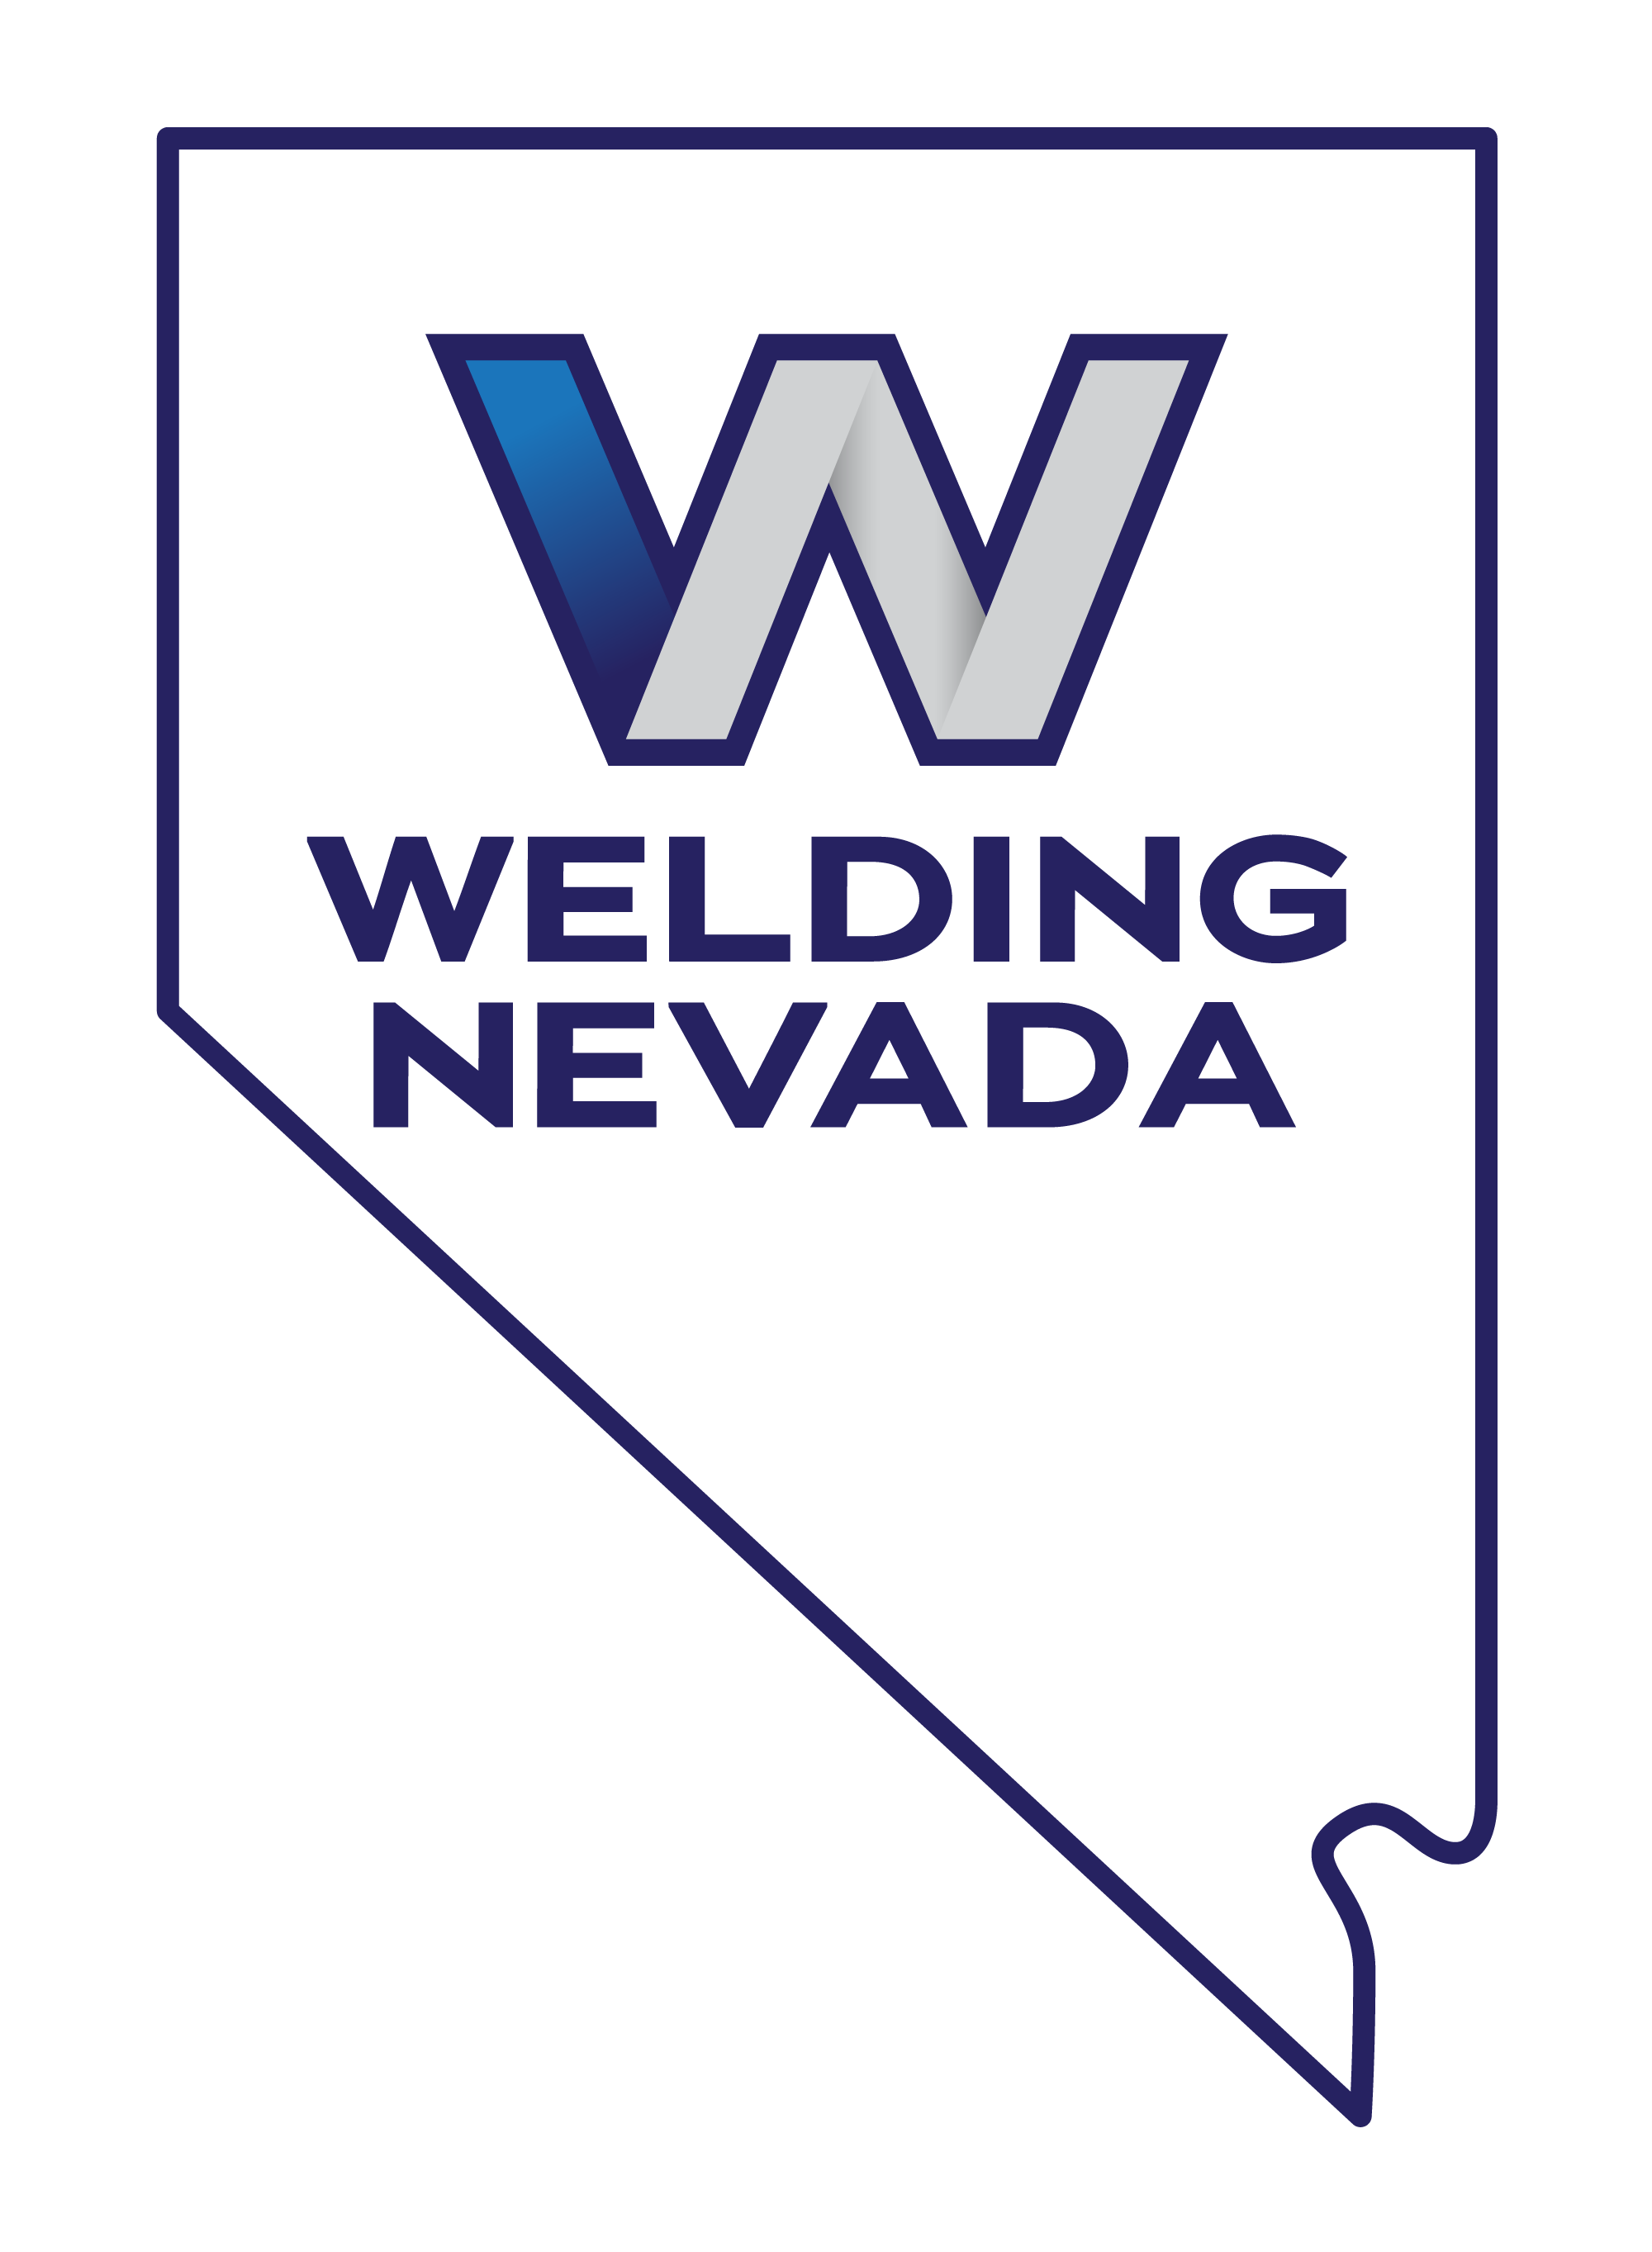 Sponsored by Welding Nevada